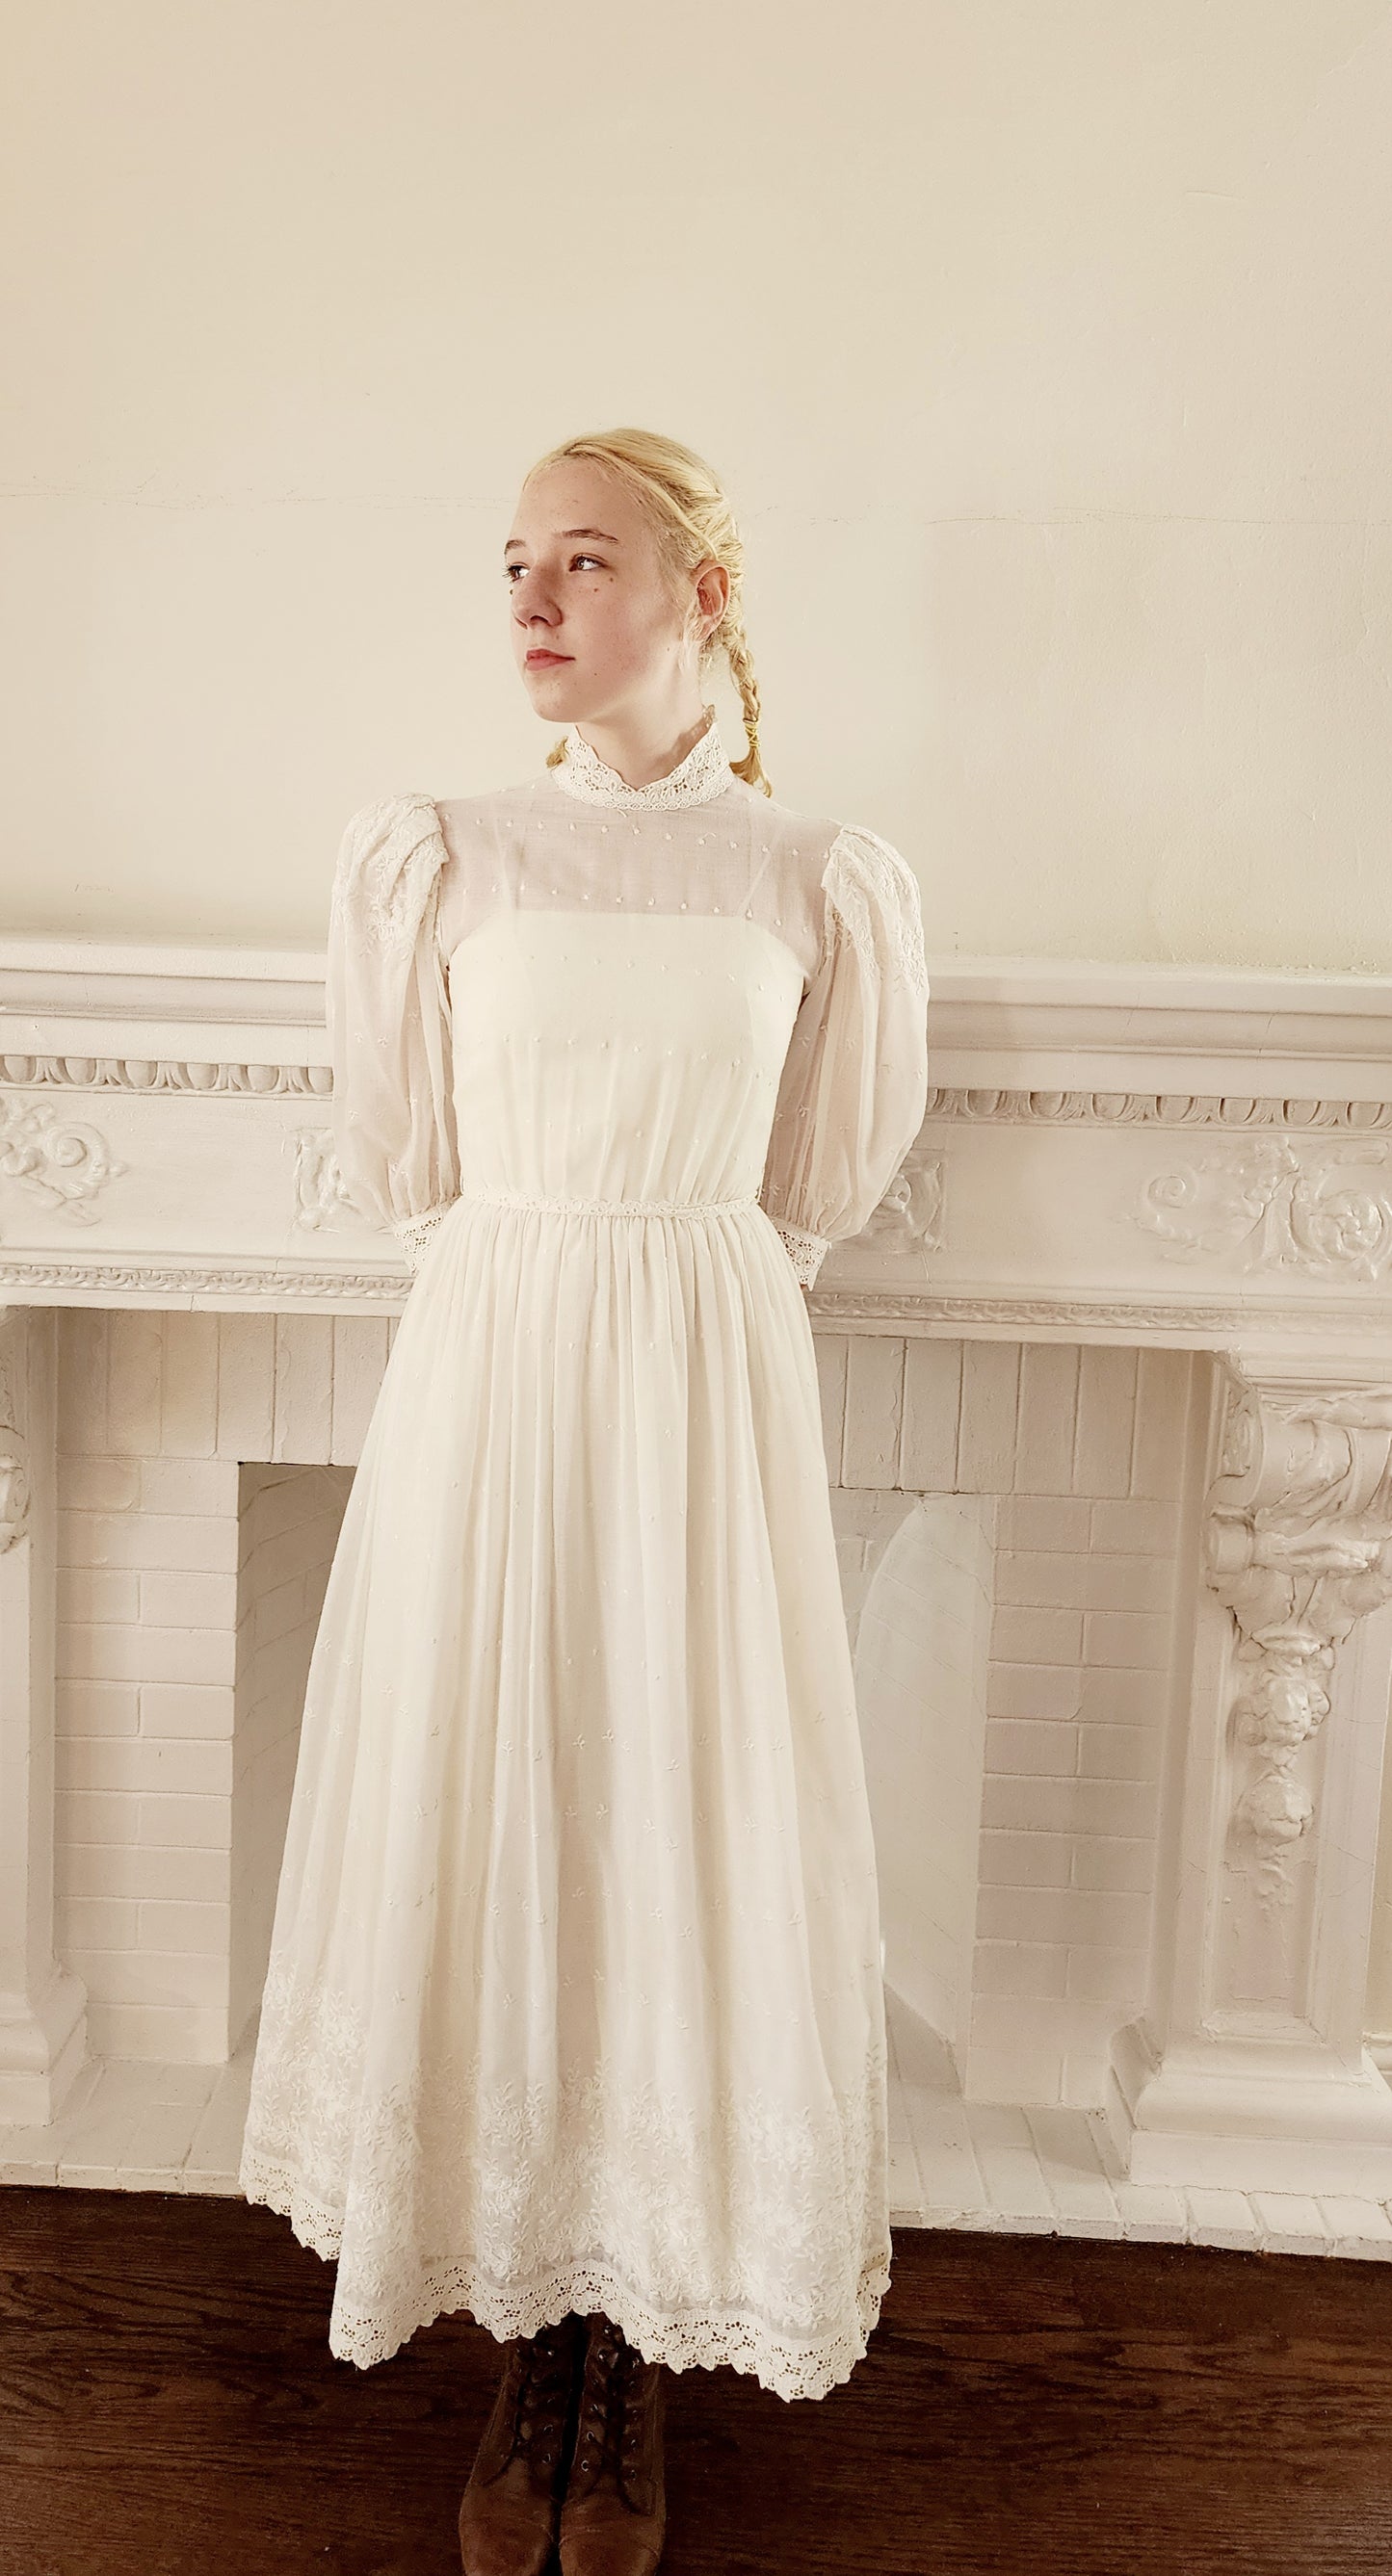 70s White Maxi Dress Neo Edwardian Meets Prairie Style Dotted Swiss & Eyelet Cotton XS